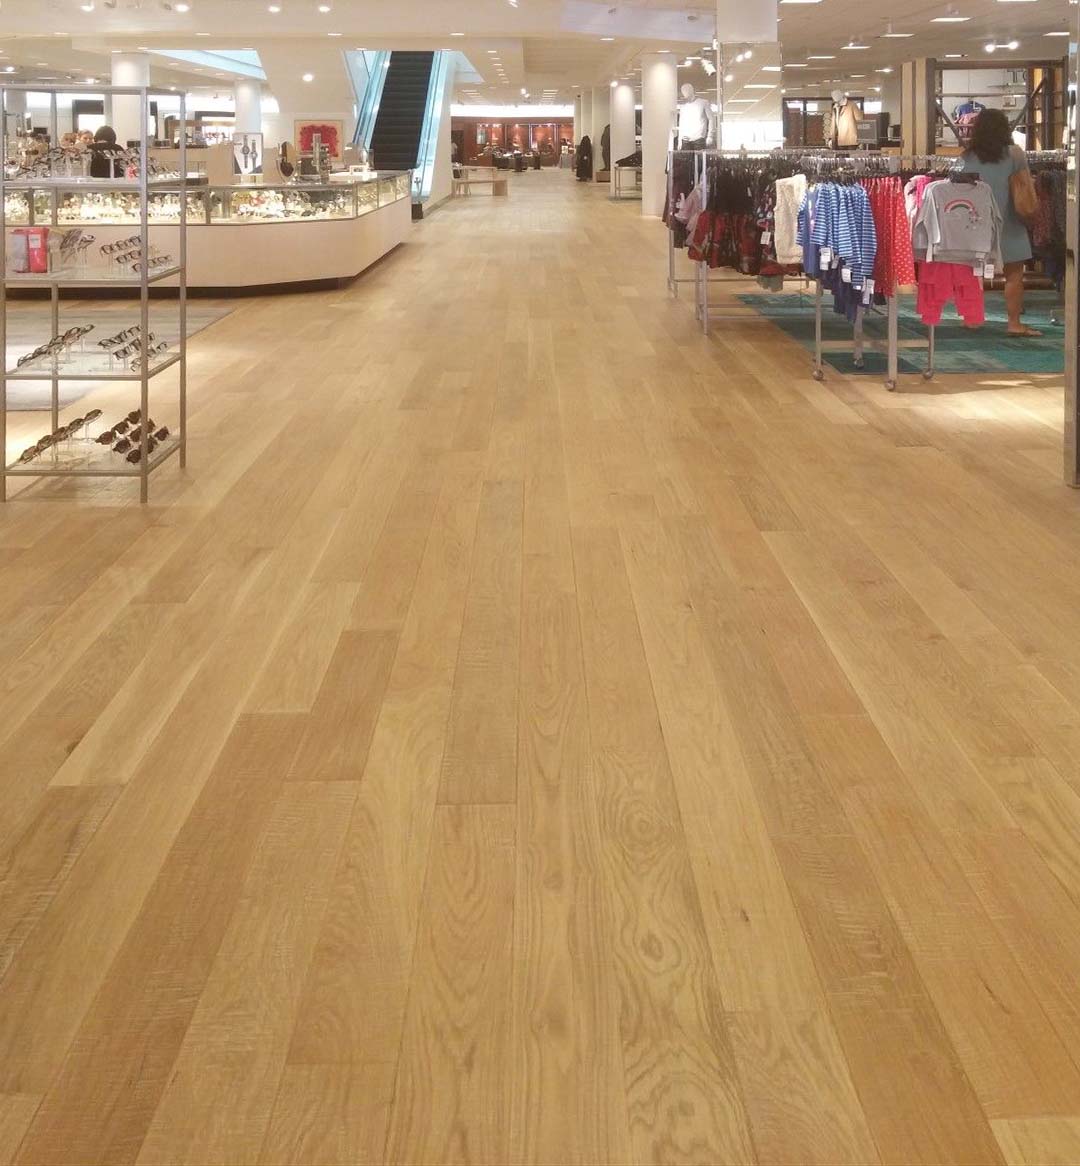 Commercial Hardwood Flooring in Retail